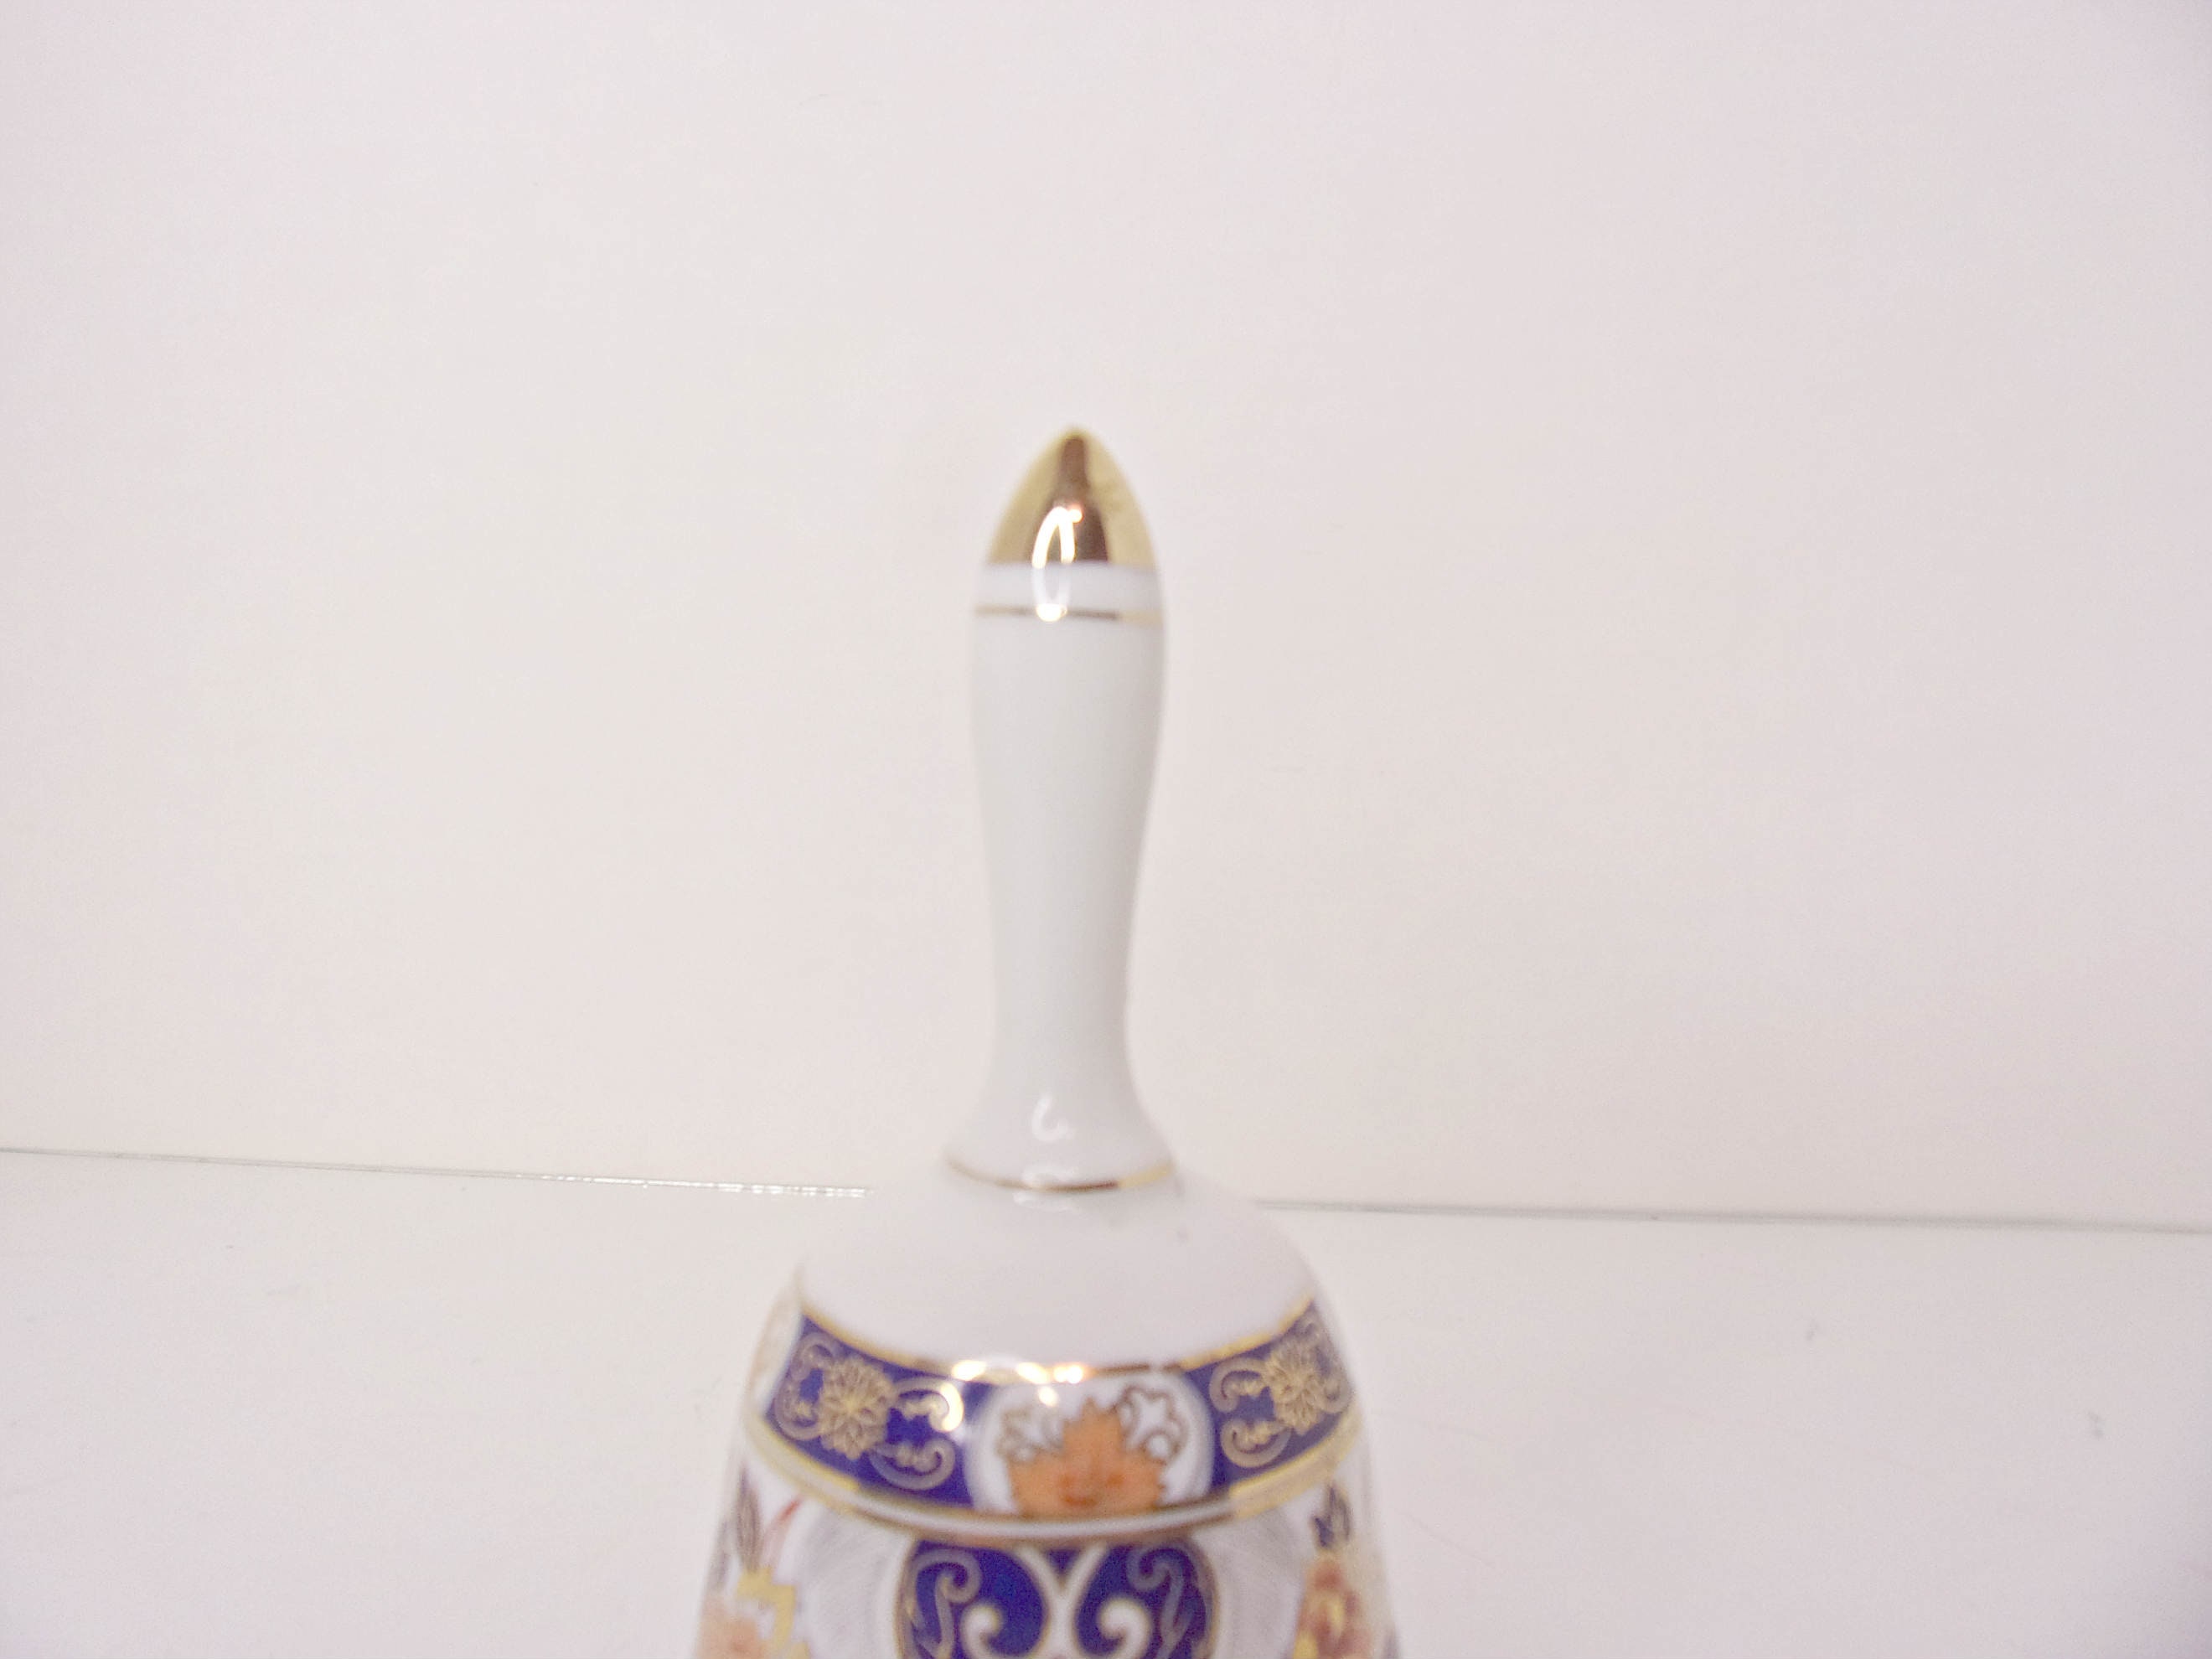 Vintage Imari Porcelain China Bell----Stamped